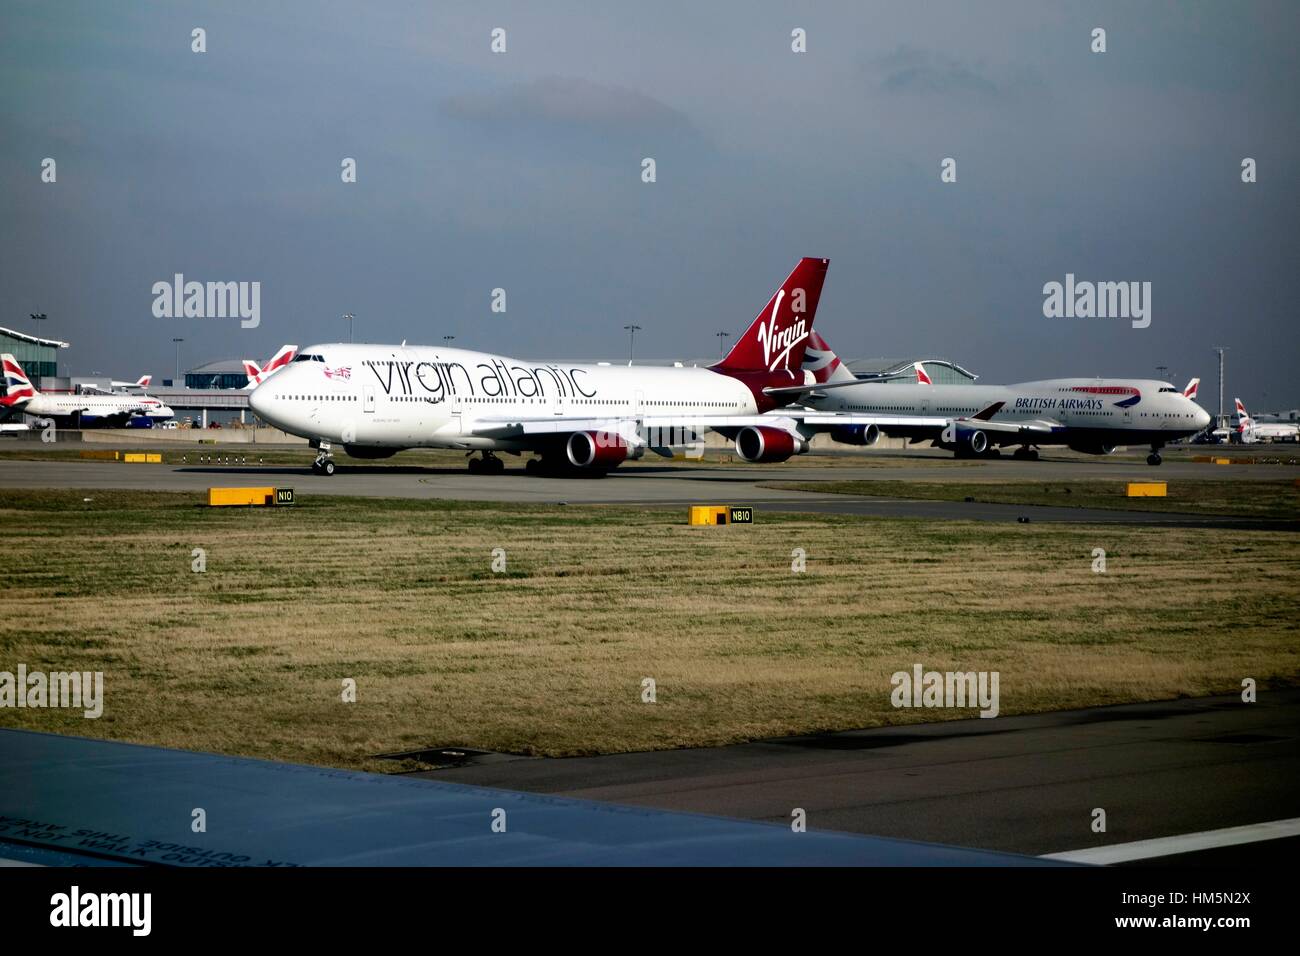 Virgin atlantic 747 departing heathrow Stock Photo